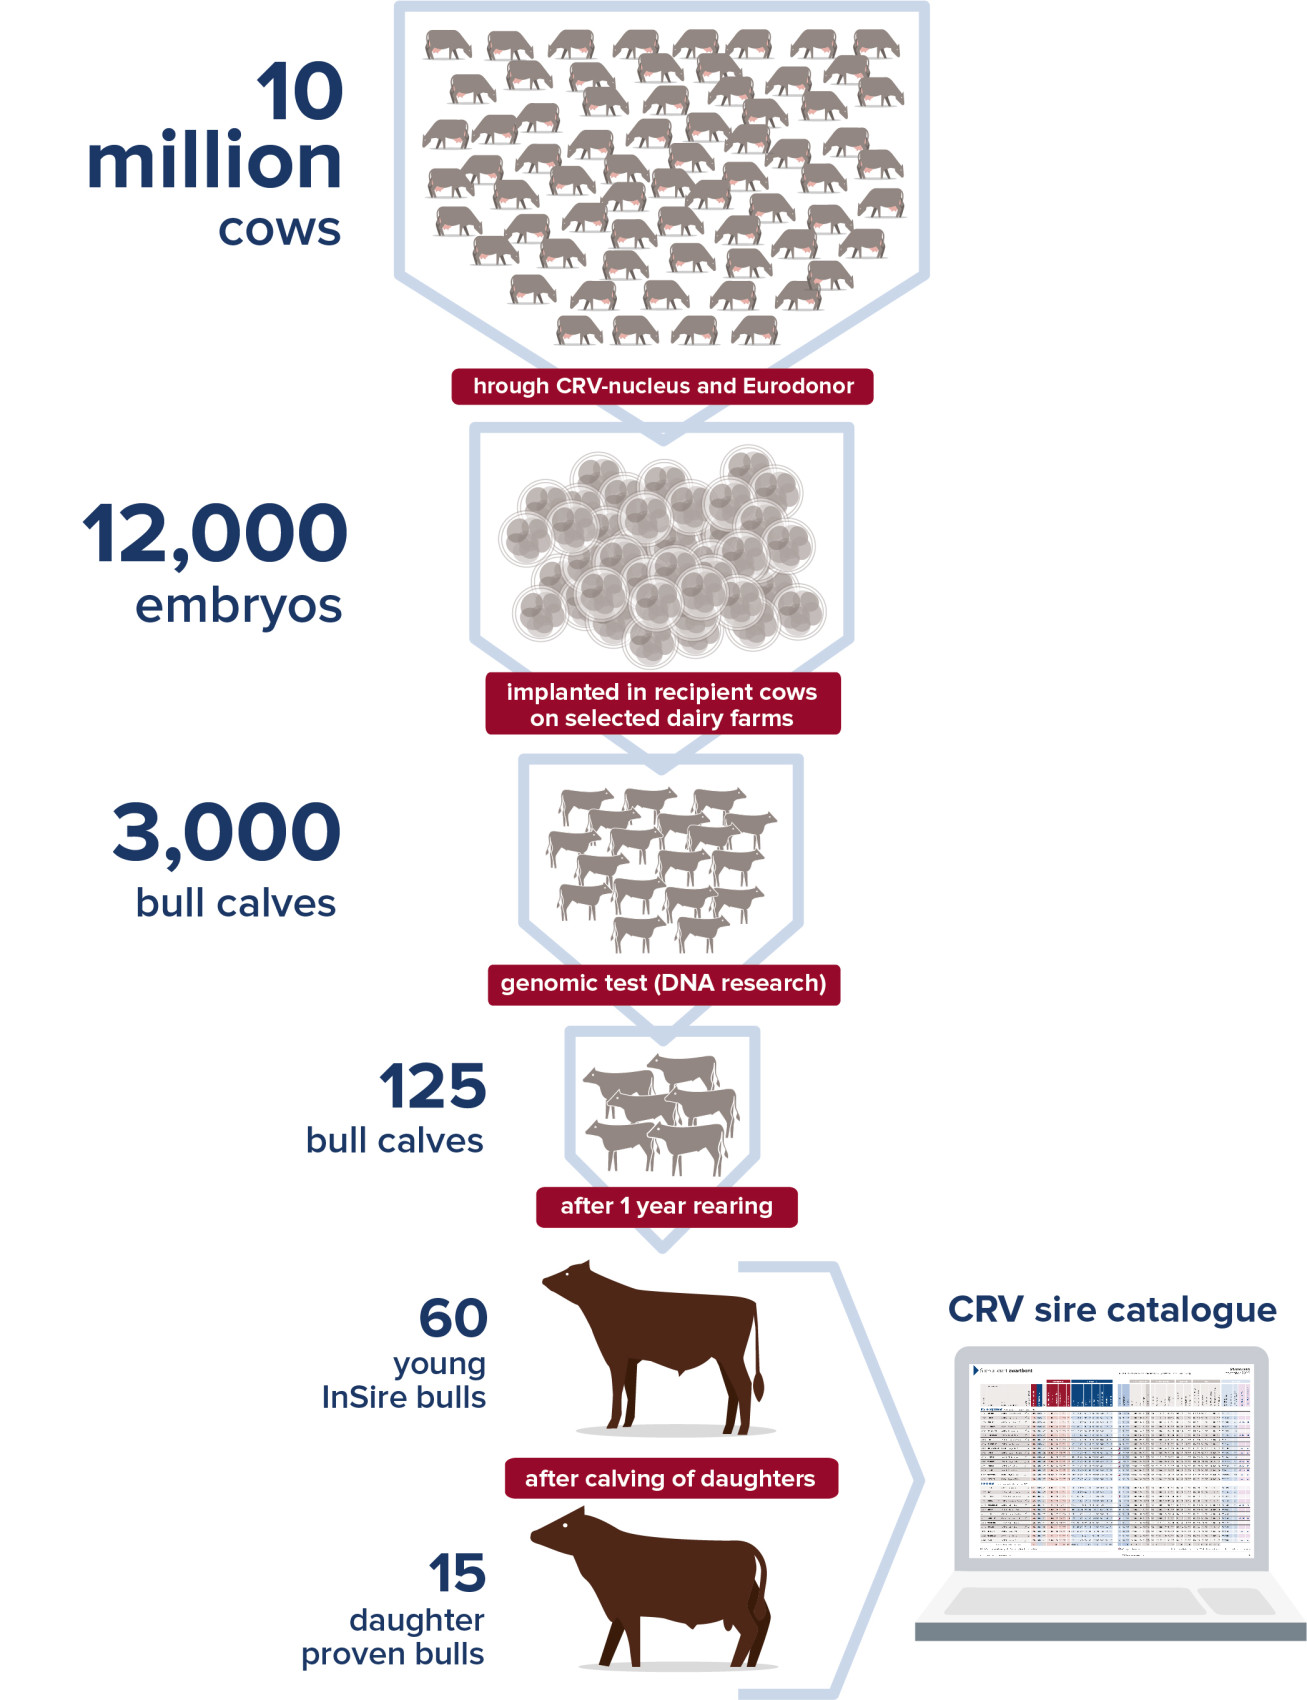 CRV Holstein breeding programme – from 10 million cows to 60 InSire bulls